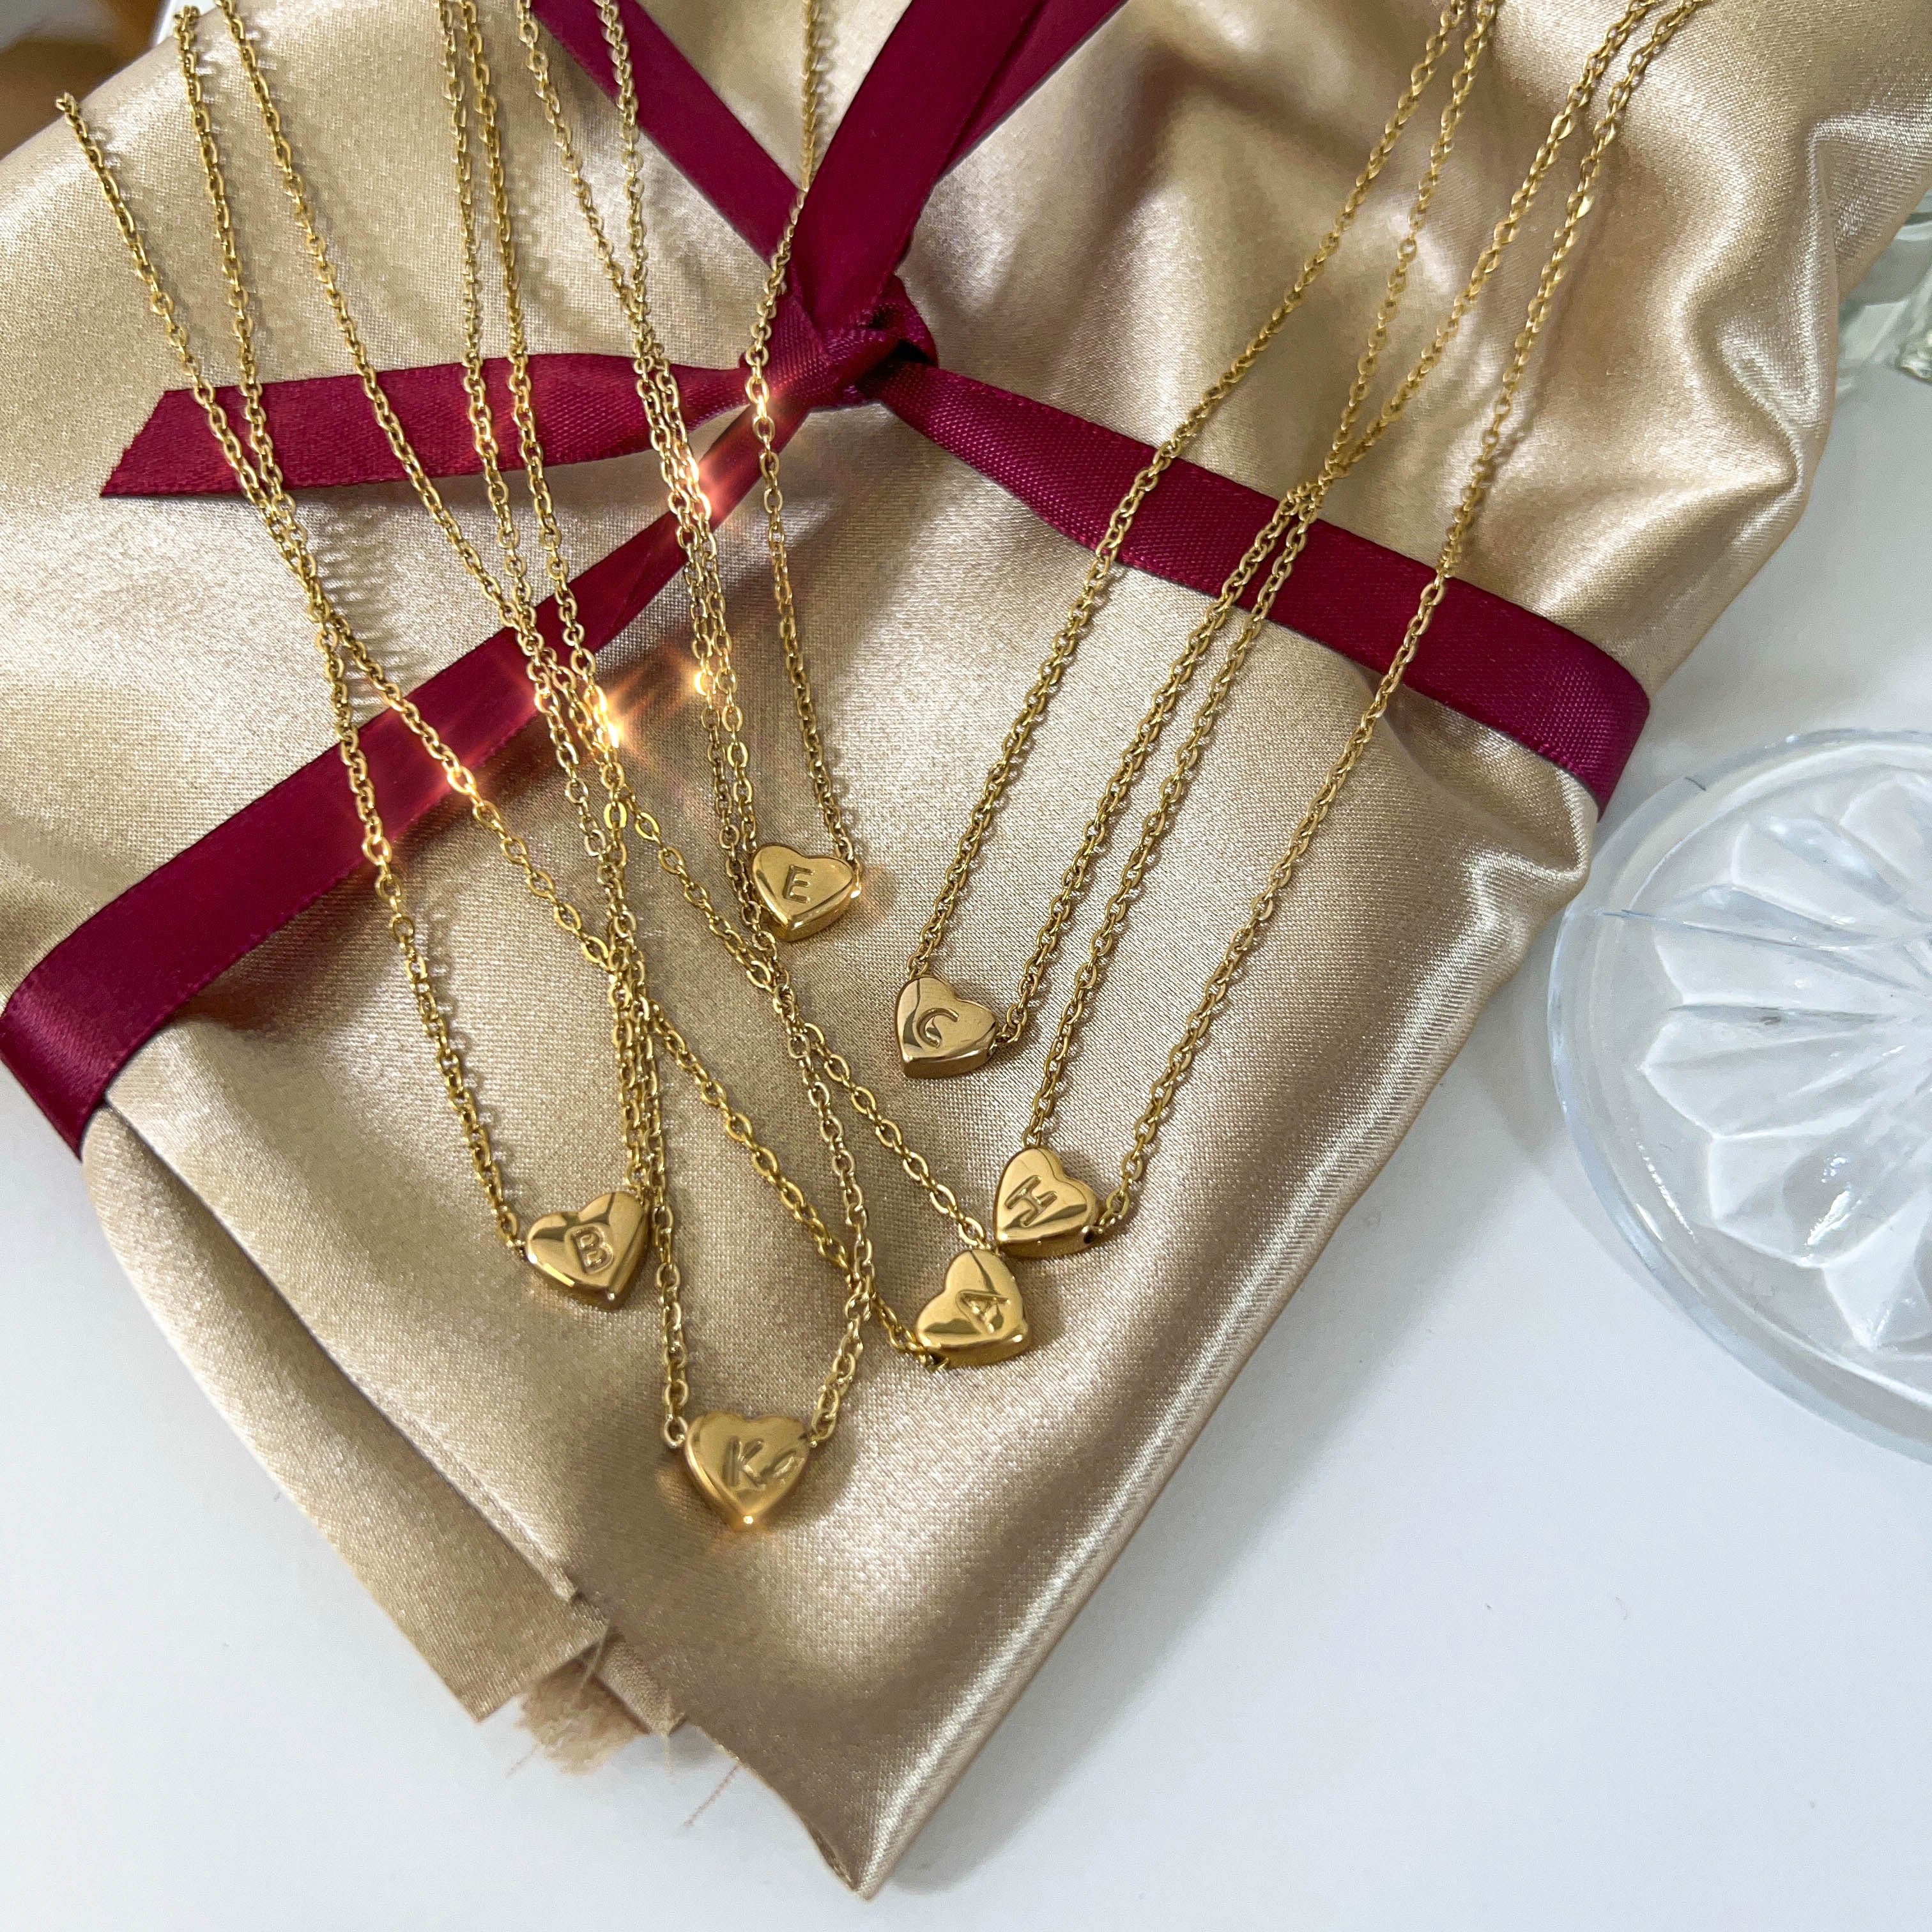 14K Gold Plated Letter Heart Pendant Necklace Choker gift holiday season birthday valentine anniversary wedding